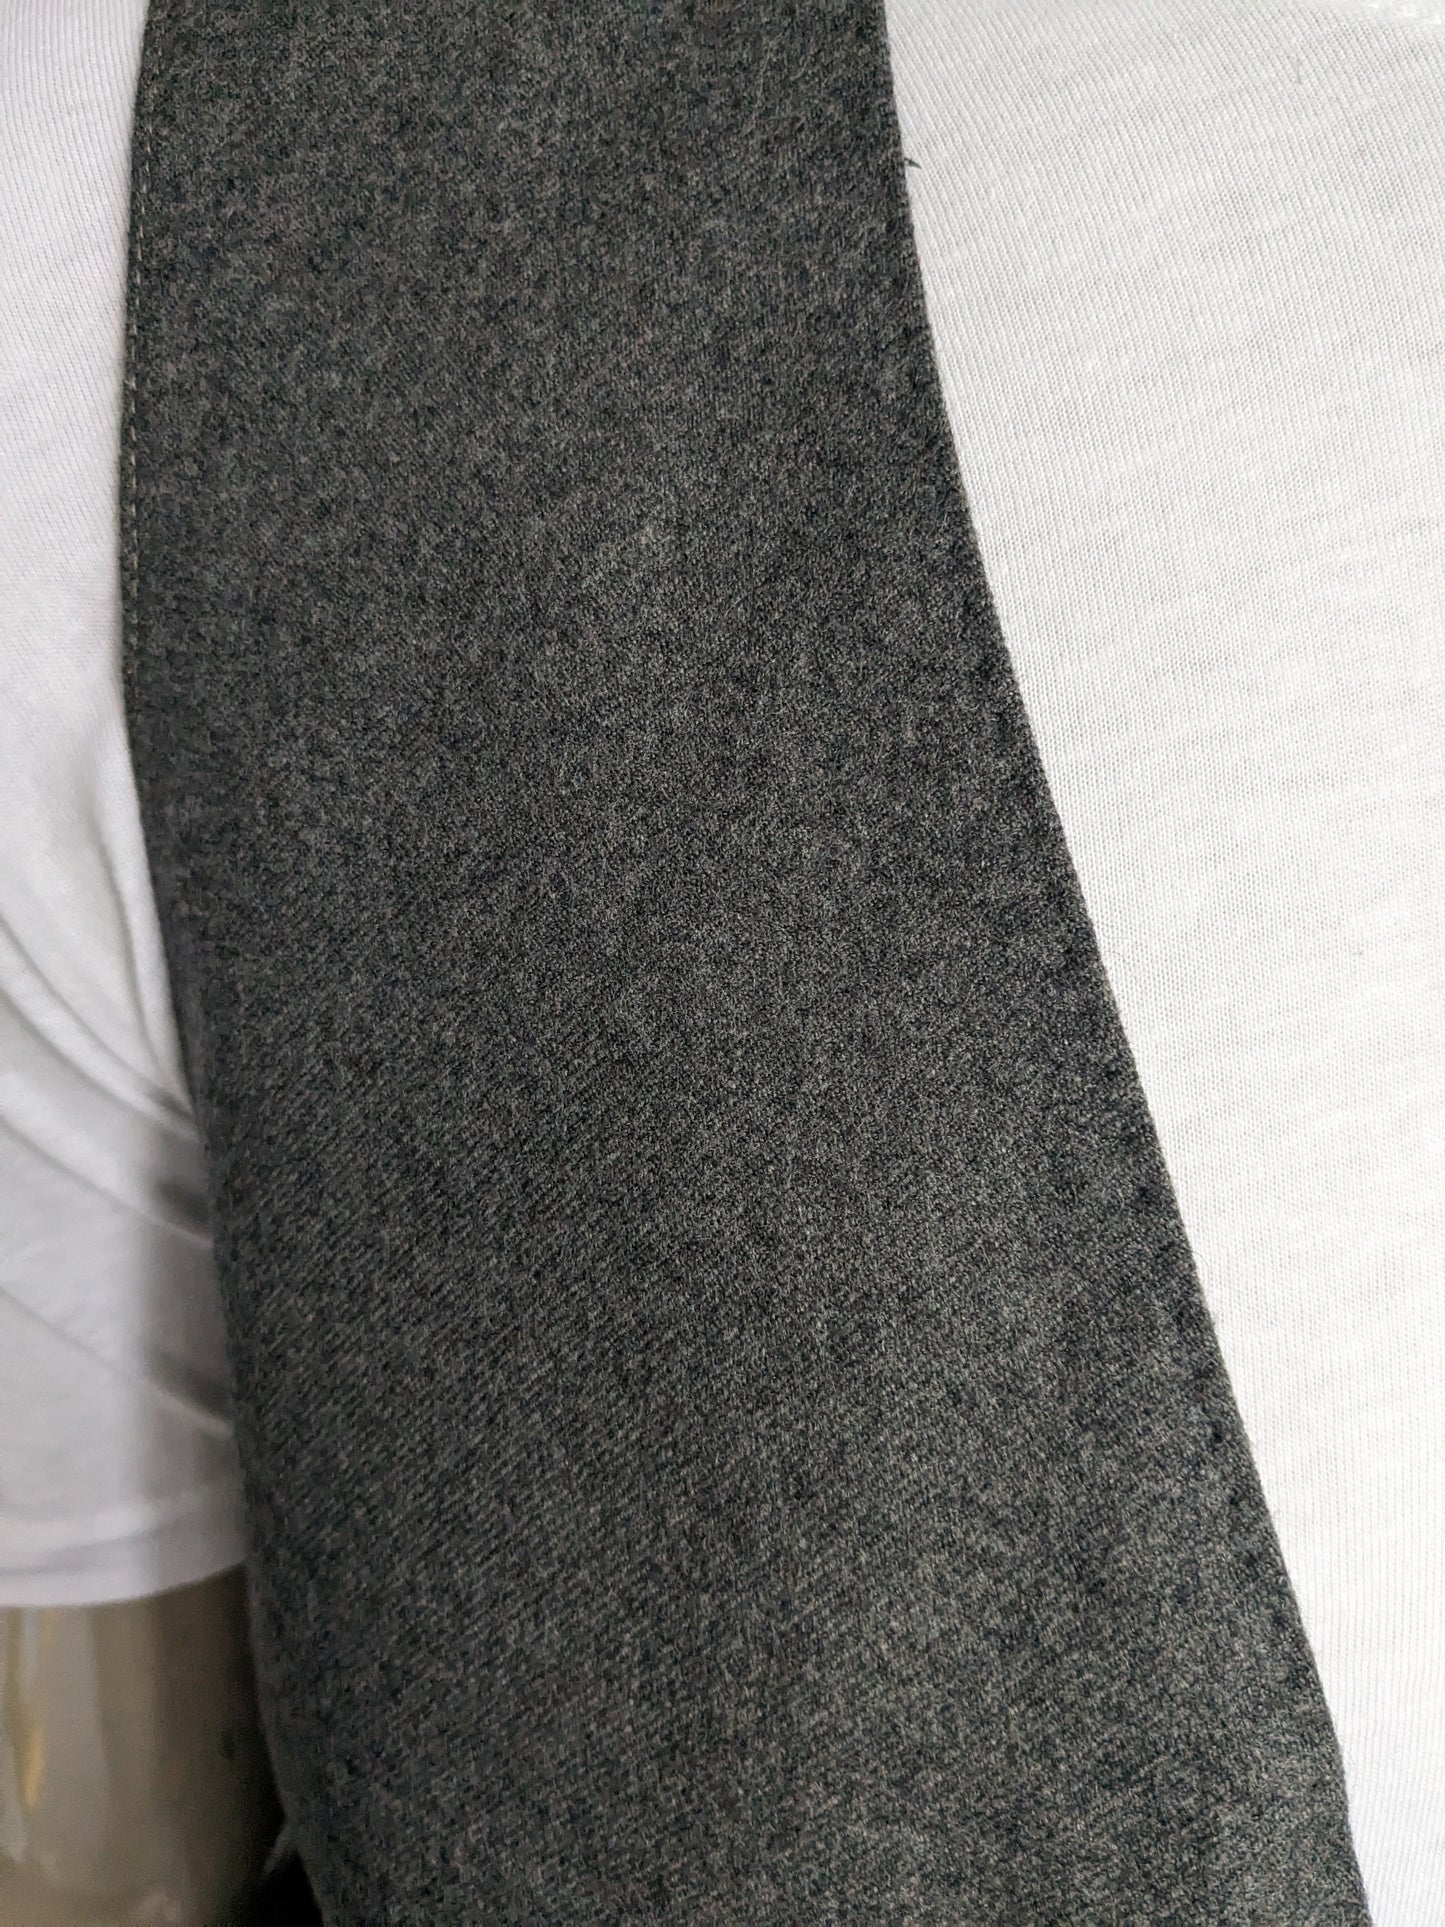 Woolen waistcoat. Gray mixed. Size M. #328